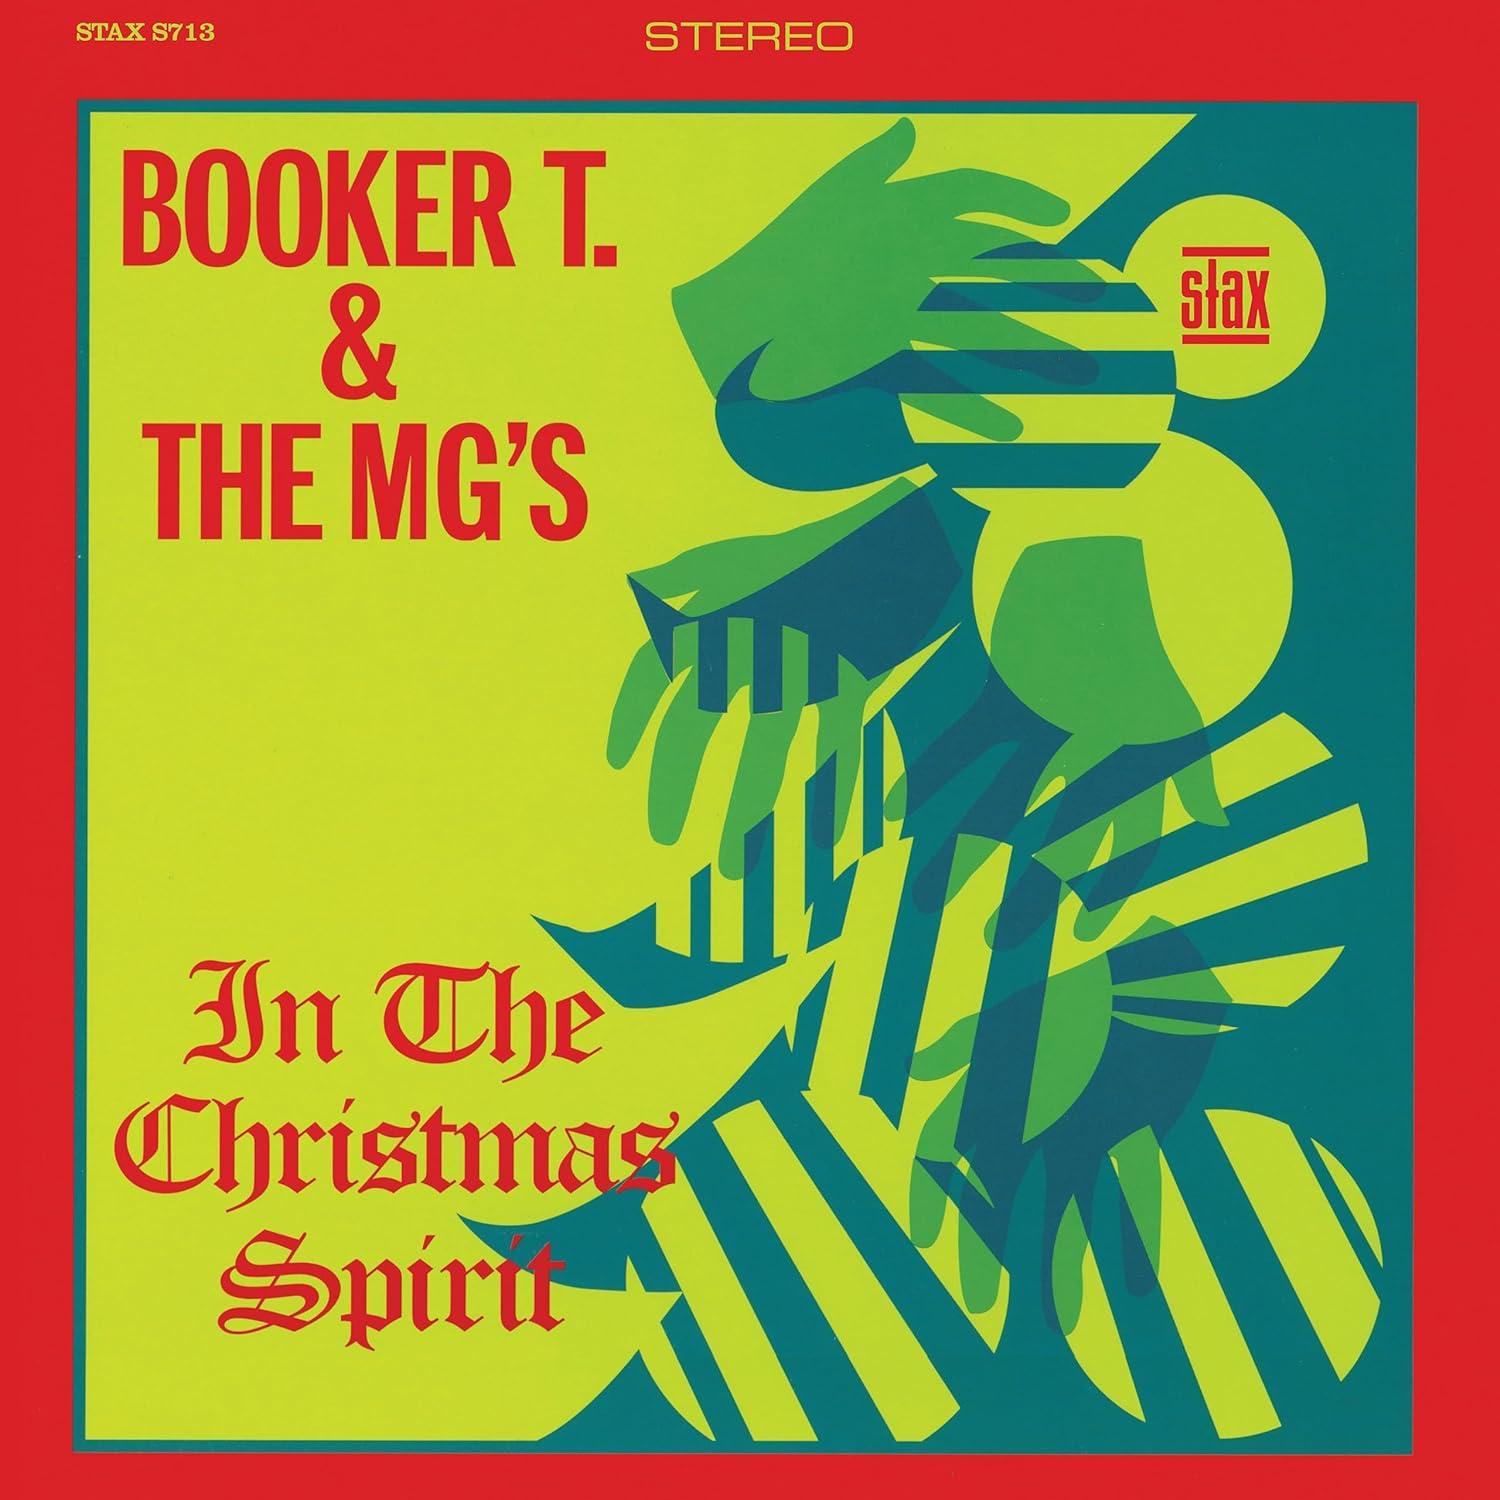 Booker T. & The MG's - In the Christmas Spirit vinyl cover